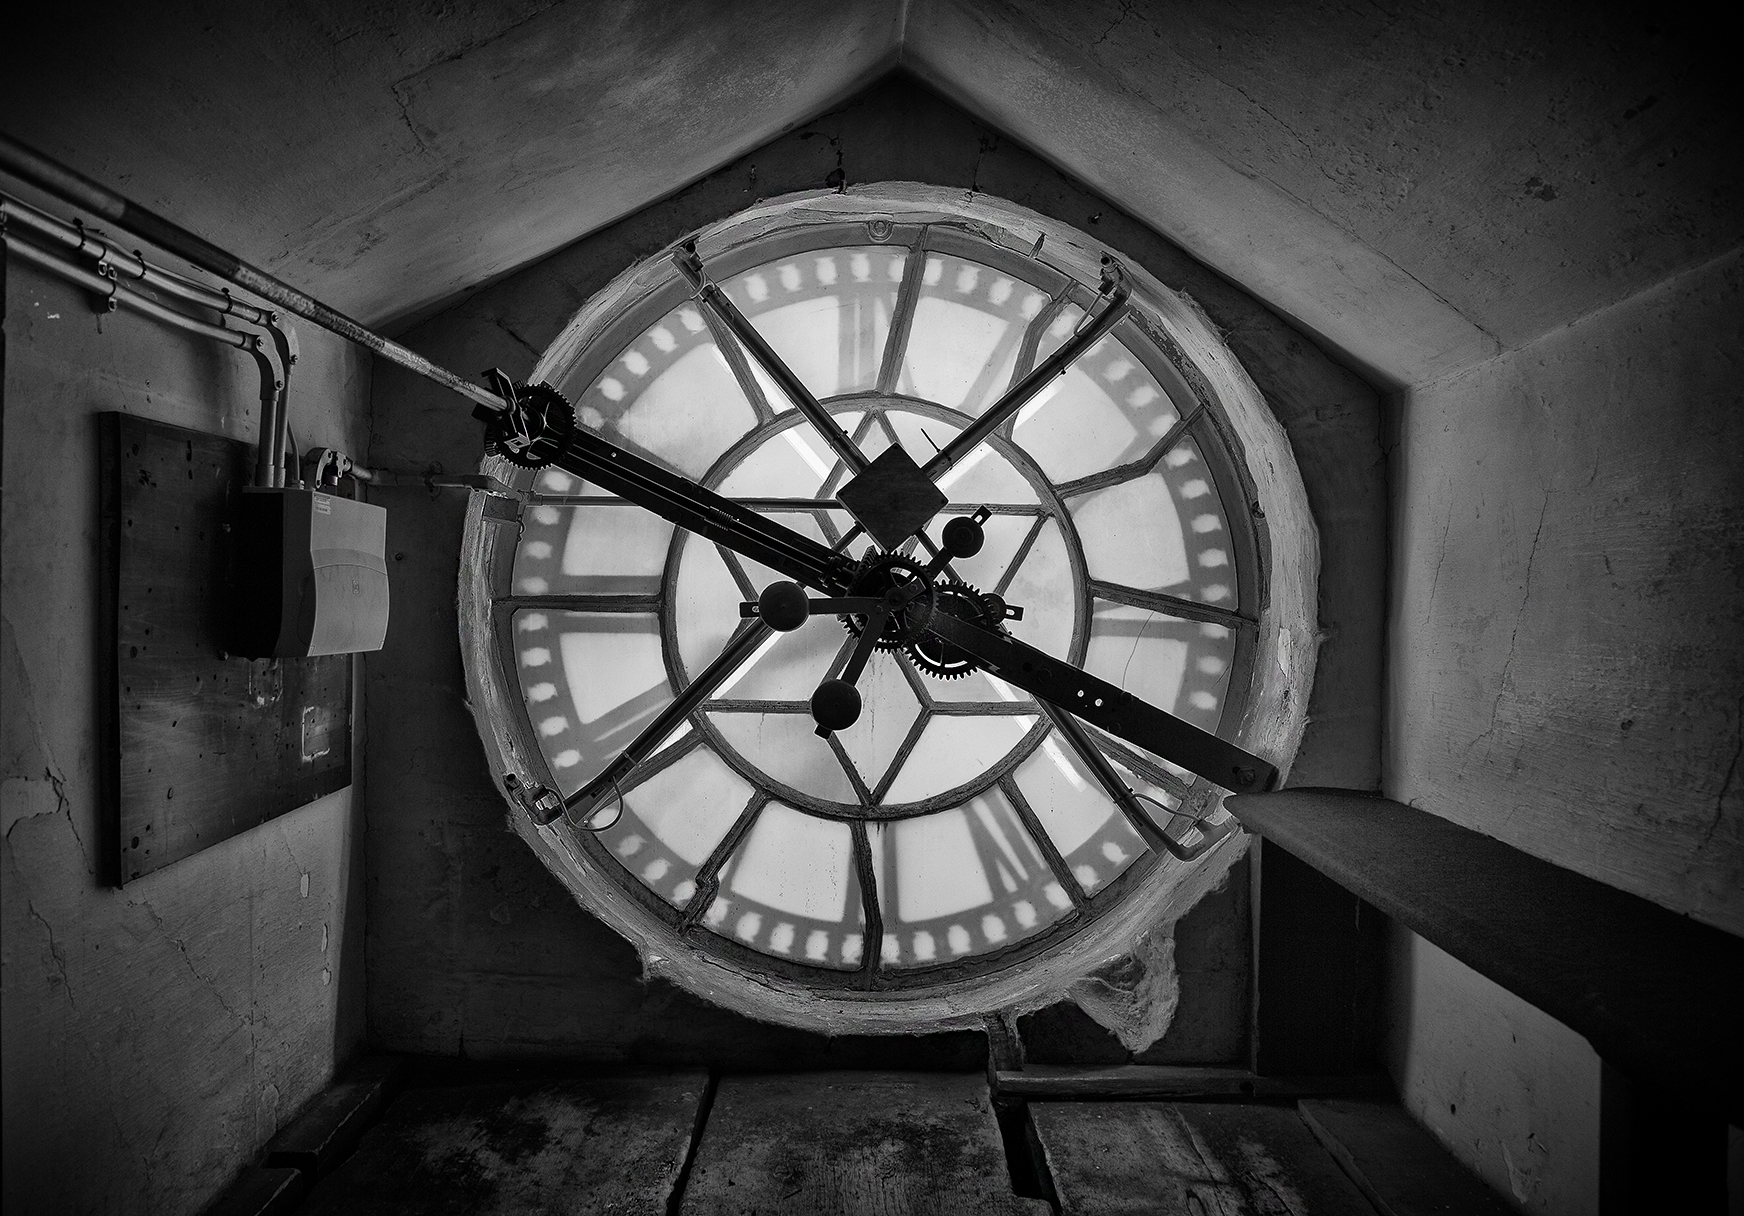 Bath abbey clock tower - UK street Photography